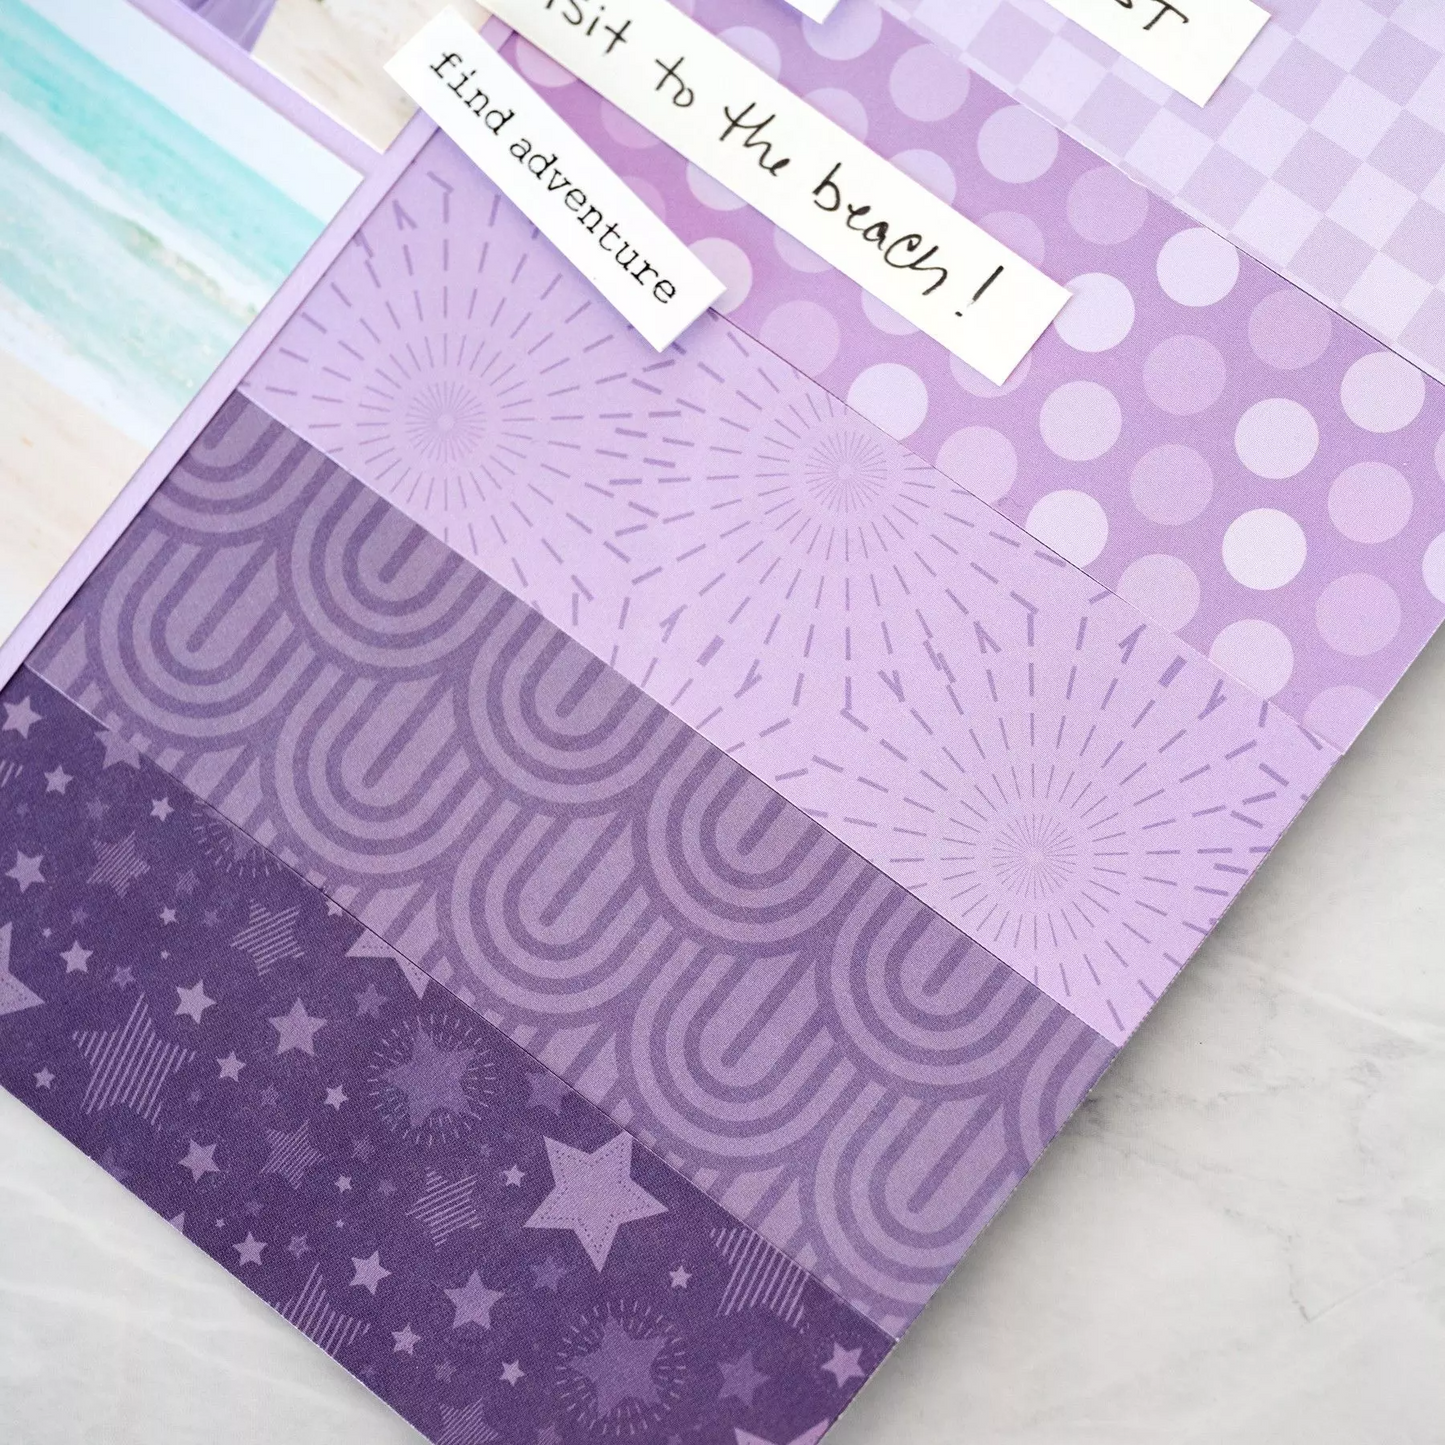 Creative Memories Totally Tonal Purple Ice Paper Pack (12/pk)